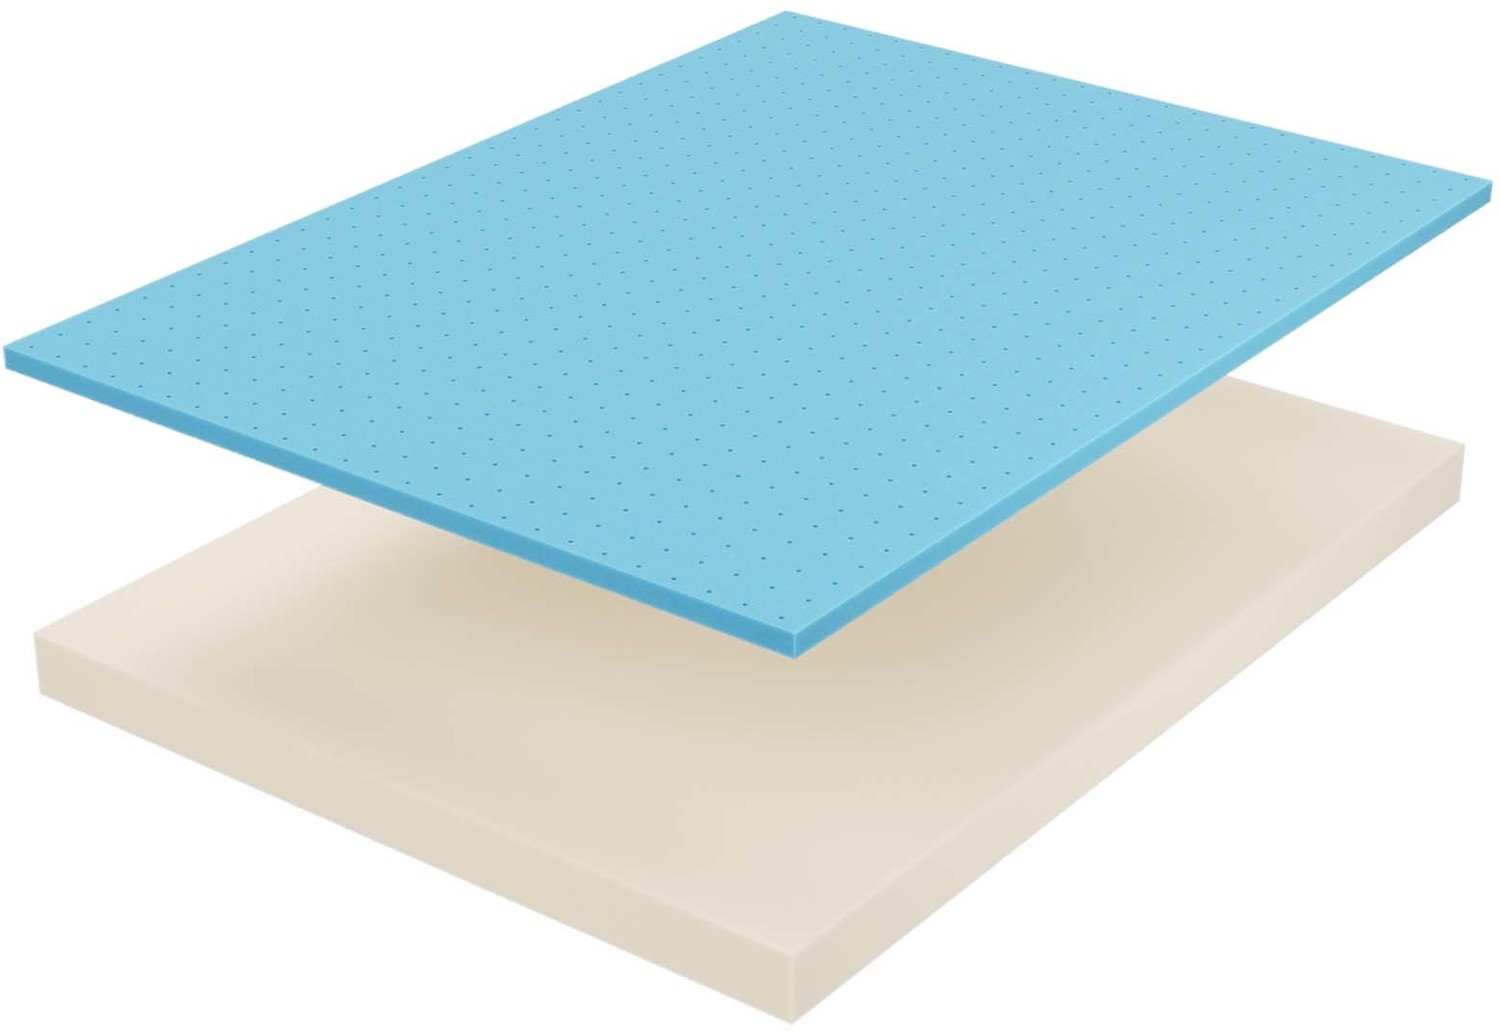 gel hybrid mattress Modway Furniture Twin White